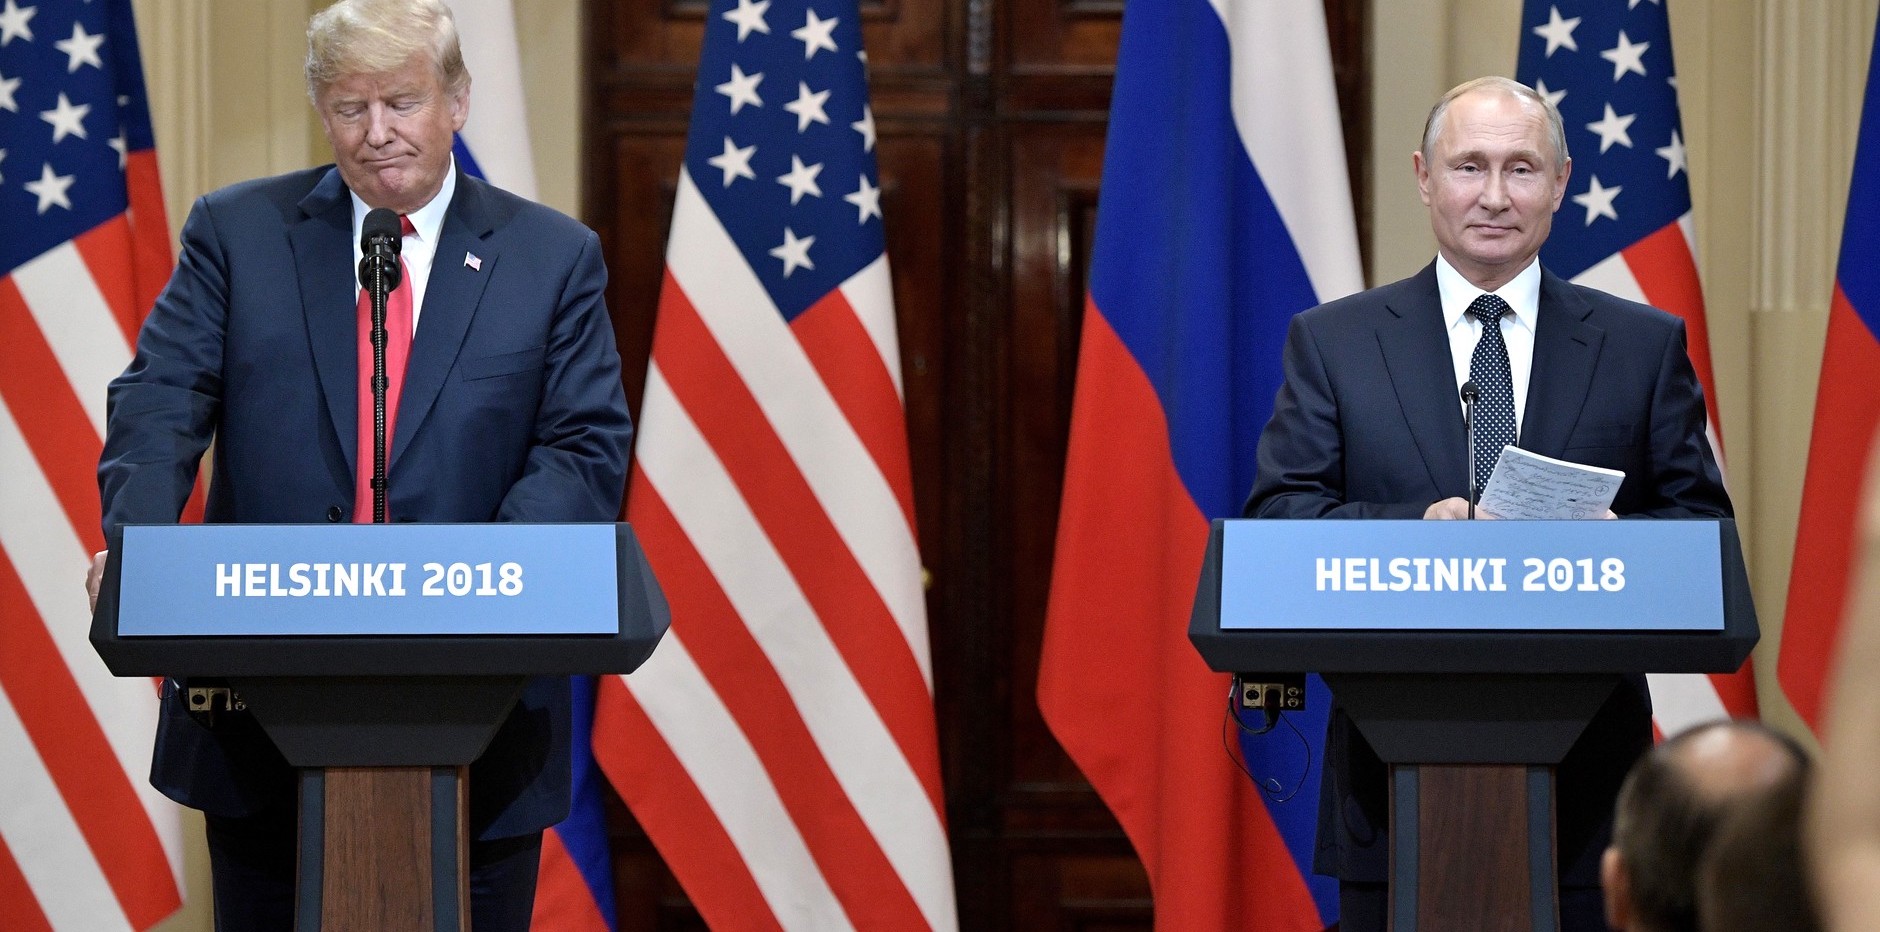 Donald Trump and Vladimir Putin at a joint press conference in Helsinki (Photo: Kremlin.ru)